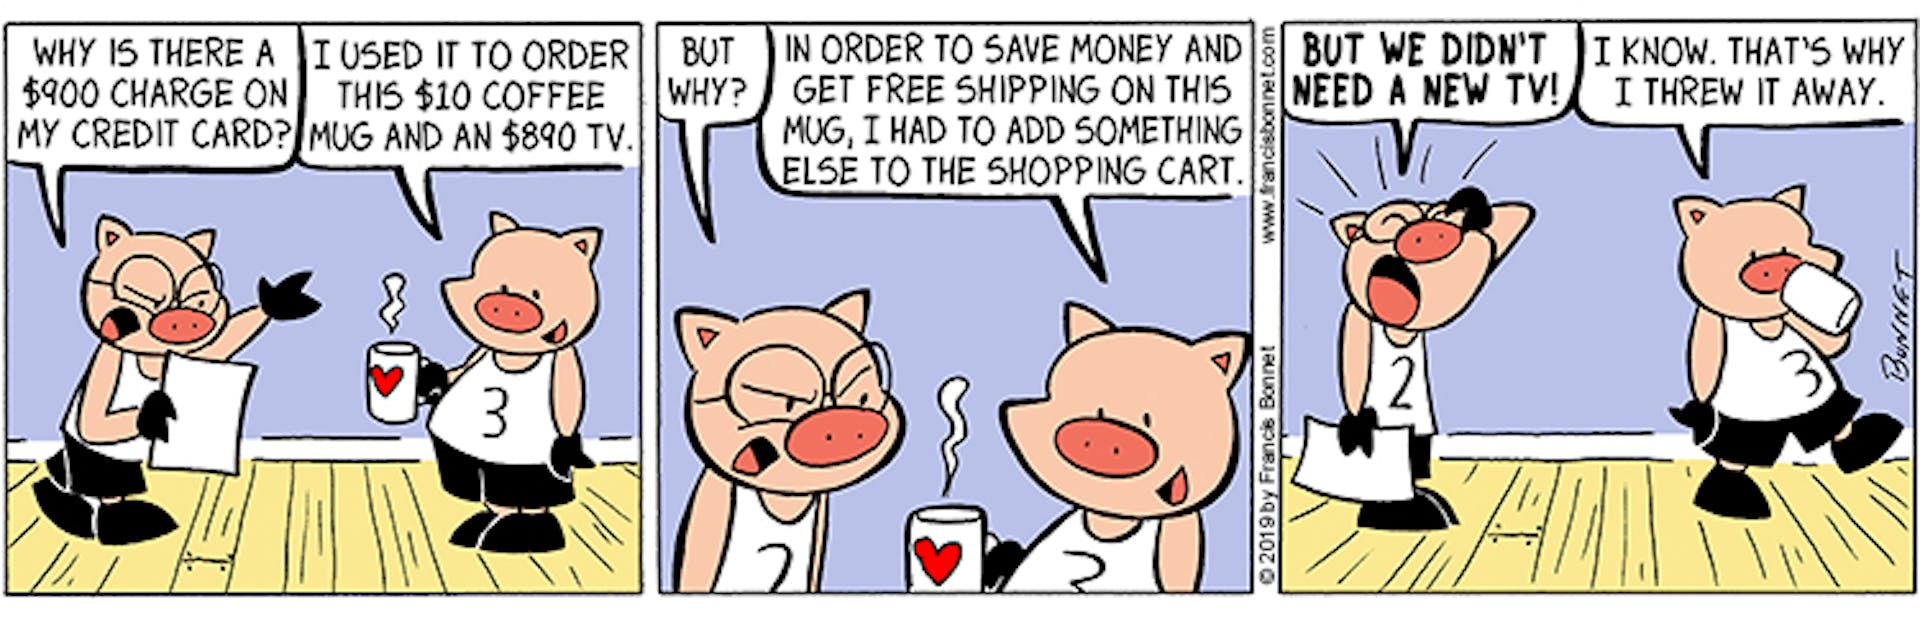 Comic Strip - Online Shopping